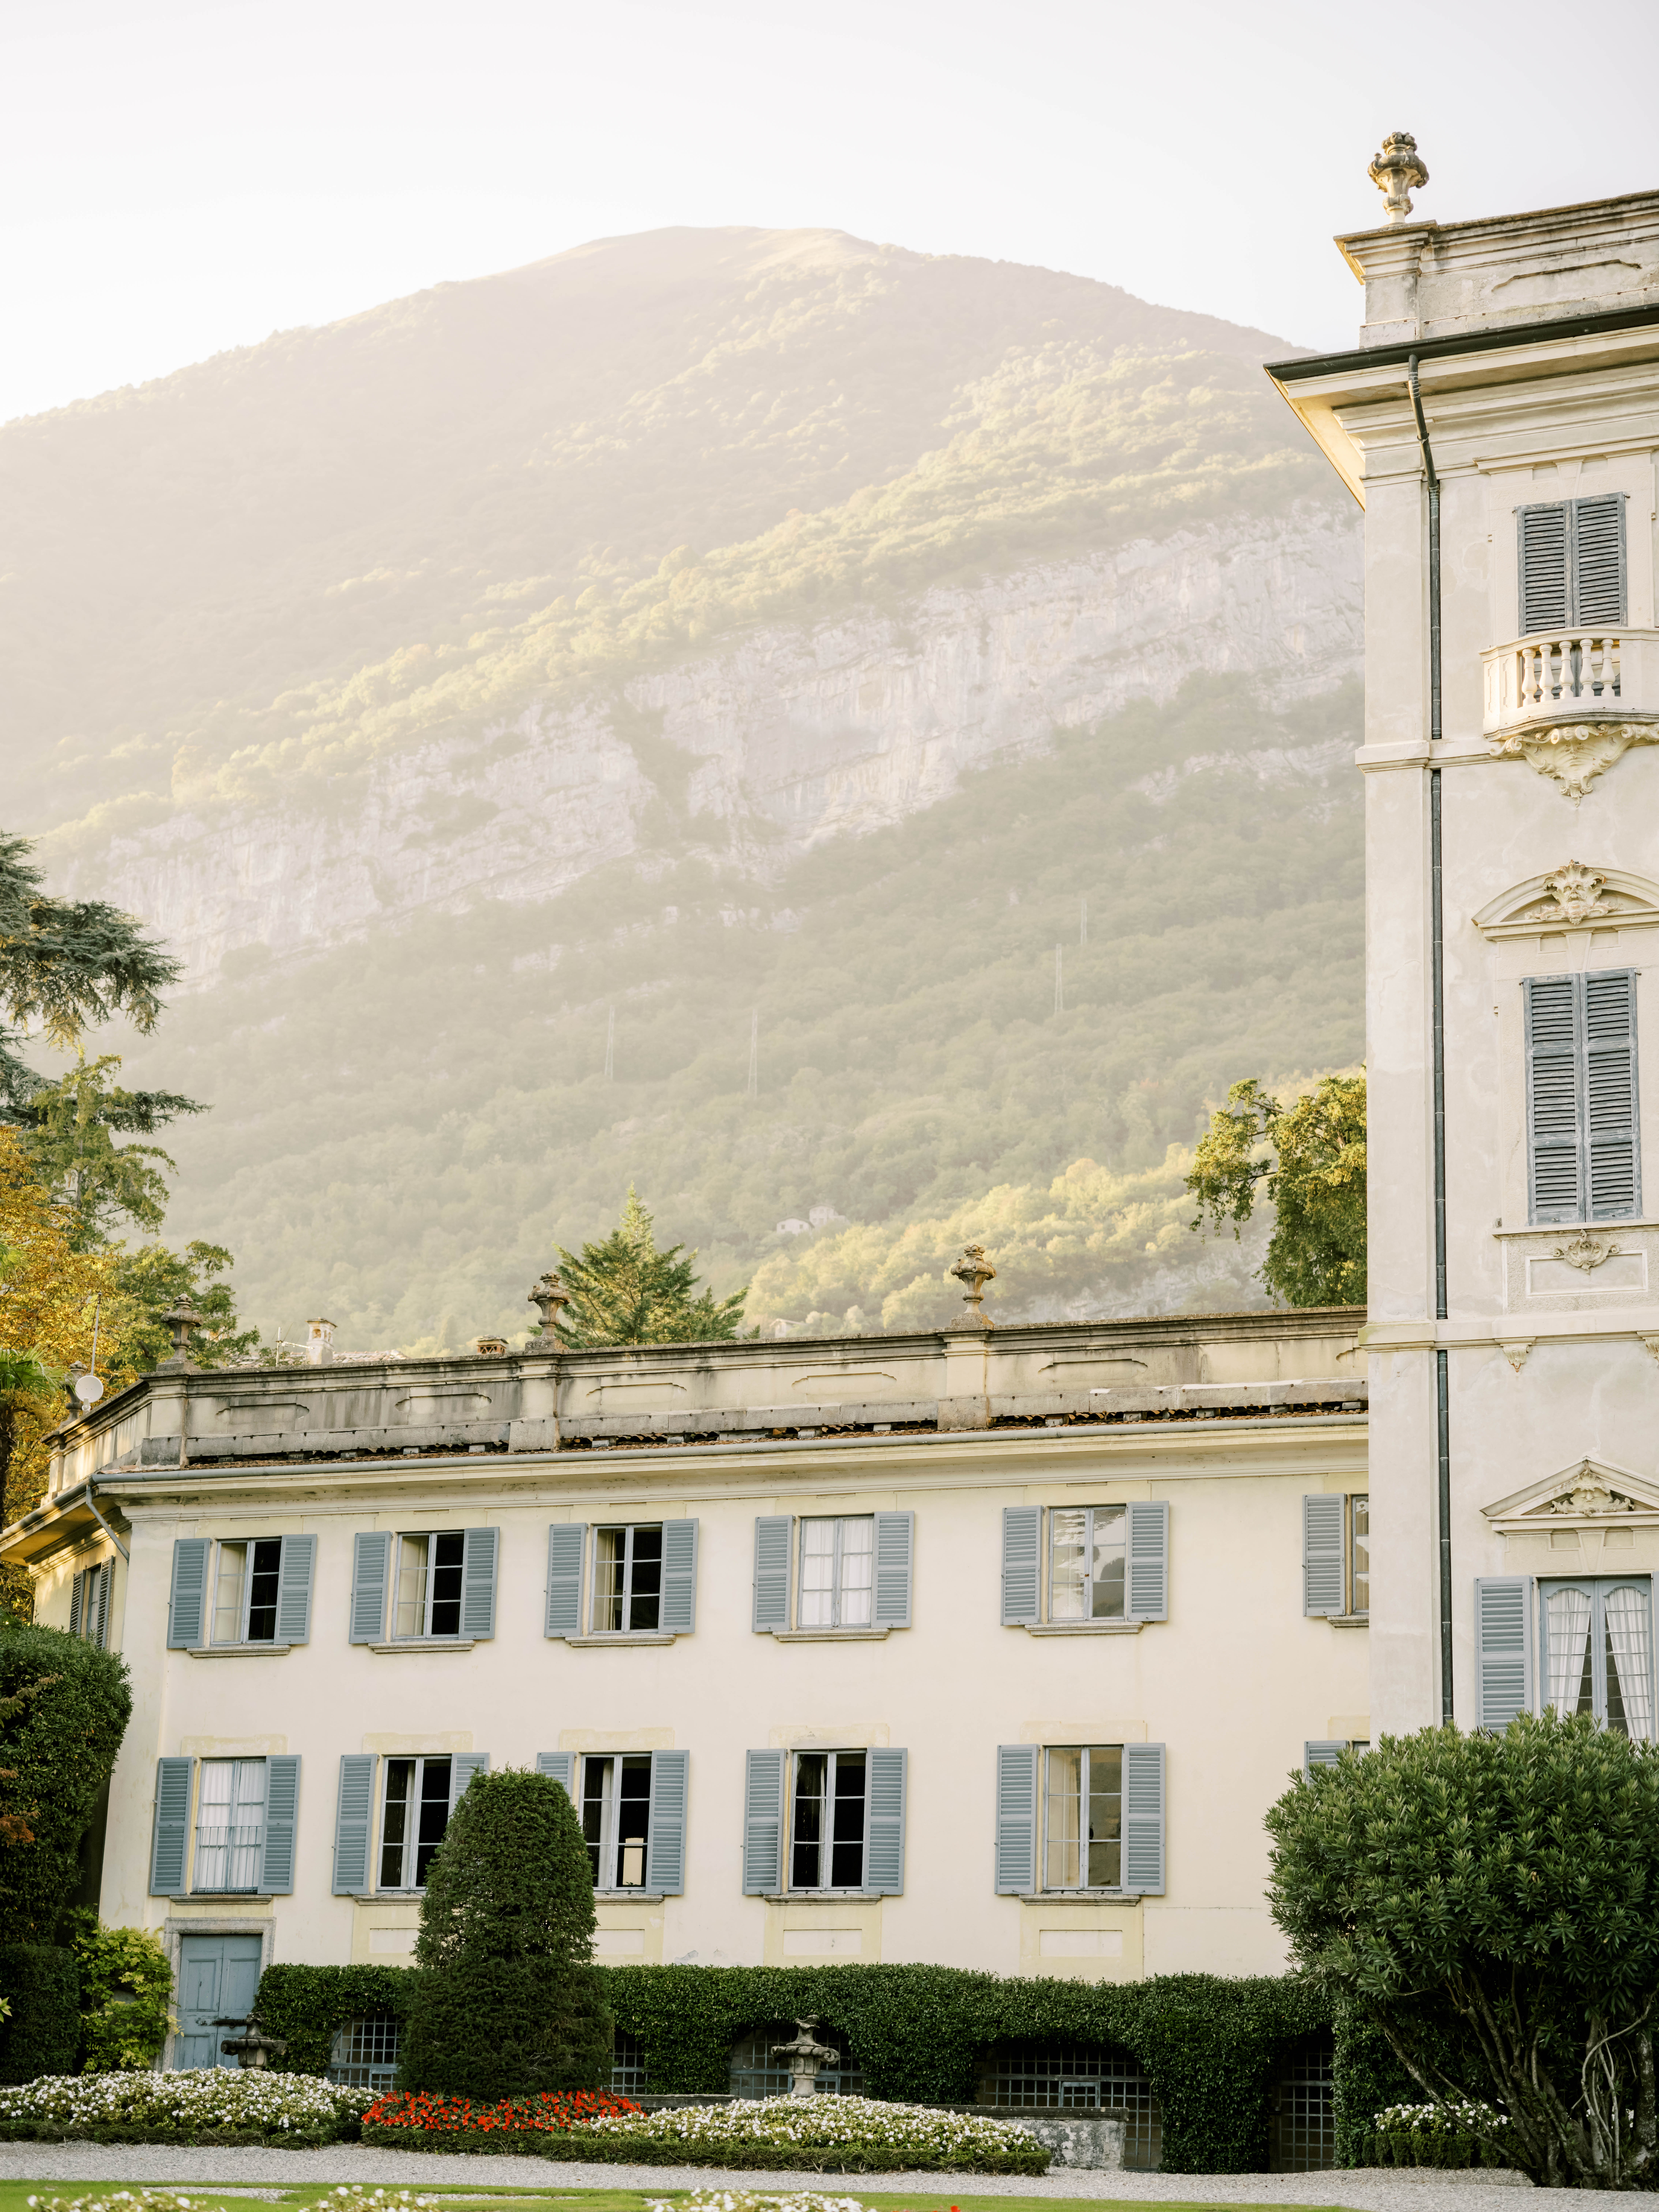 Villa Sola Cabiati. Photographed by Italy wedding photographer Amy Mulder Photography.